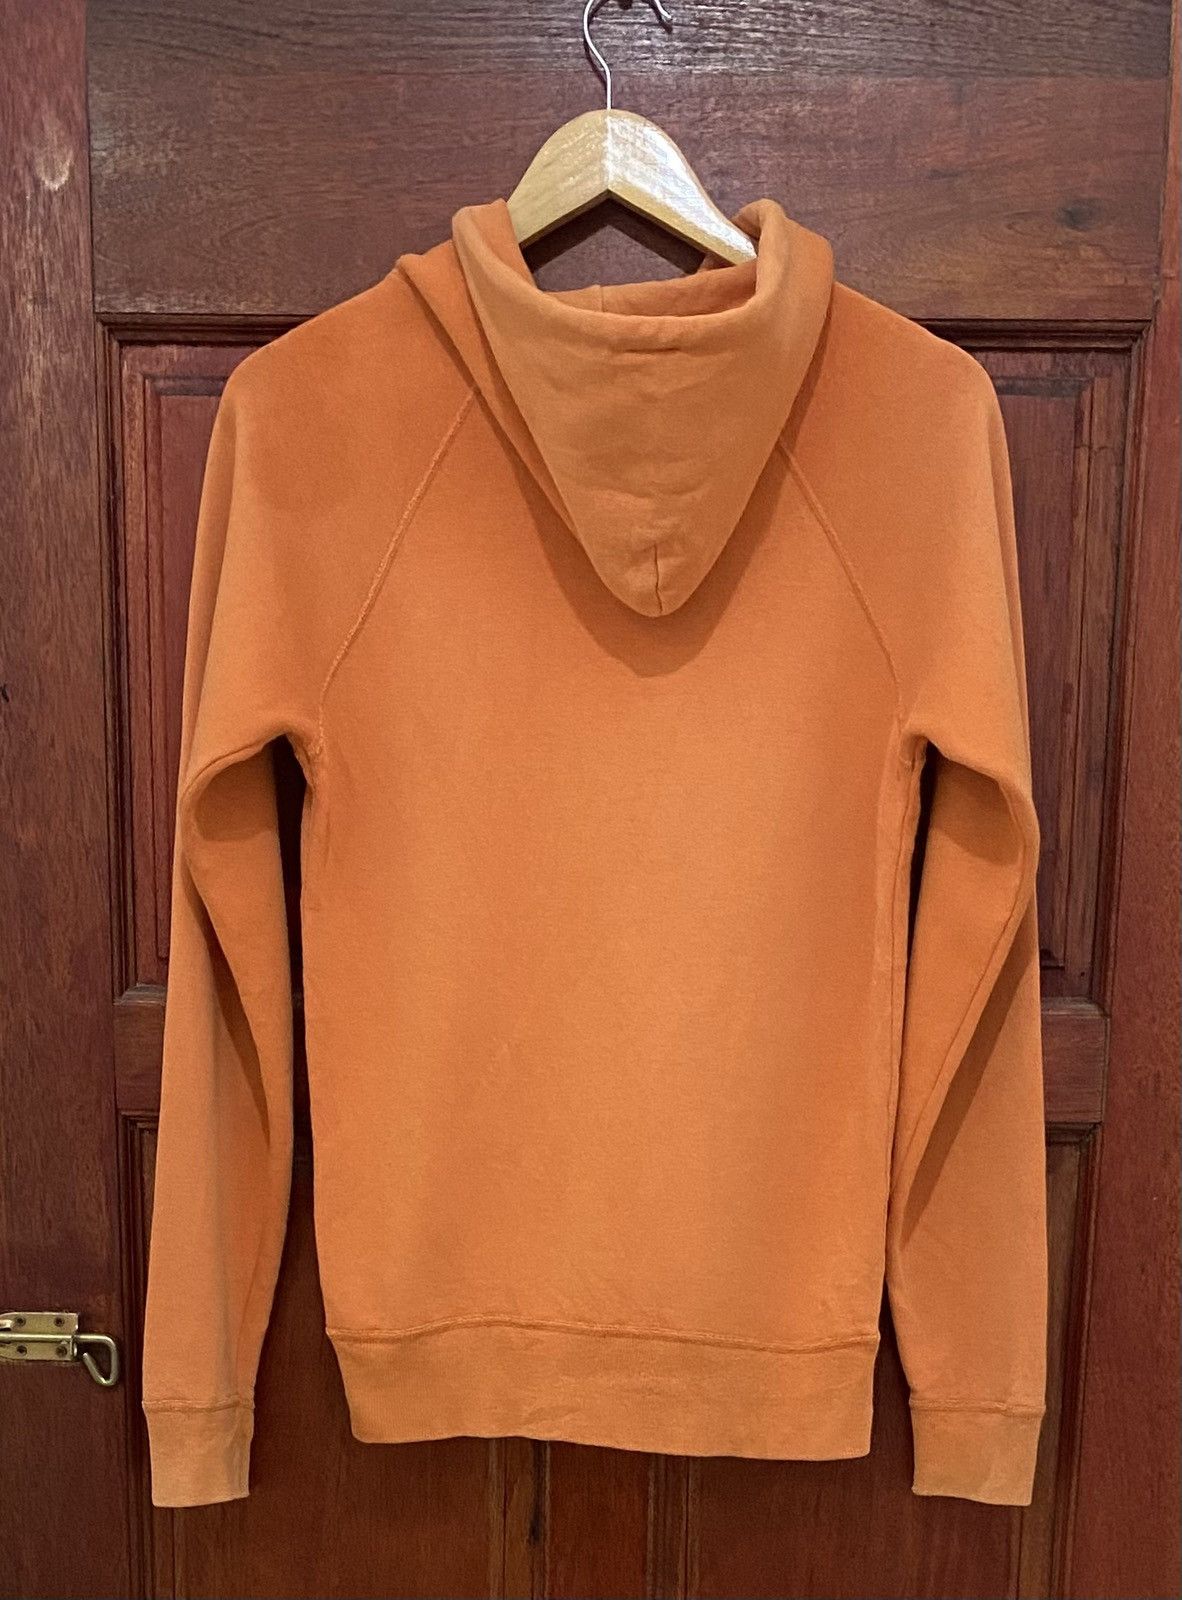 Hysteric Glamour Sweatshirt - 2